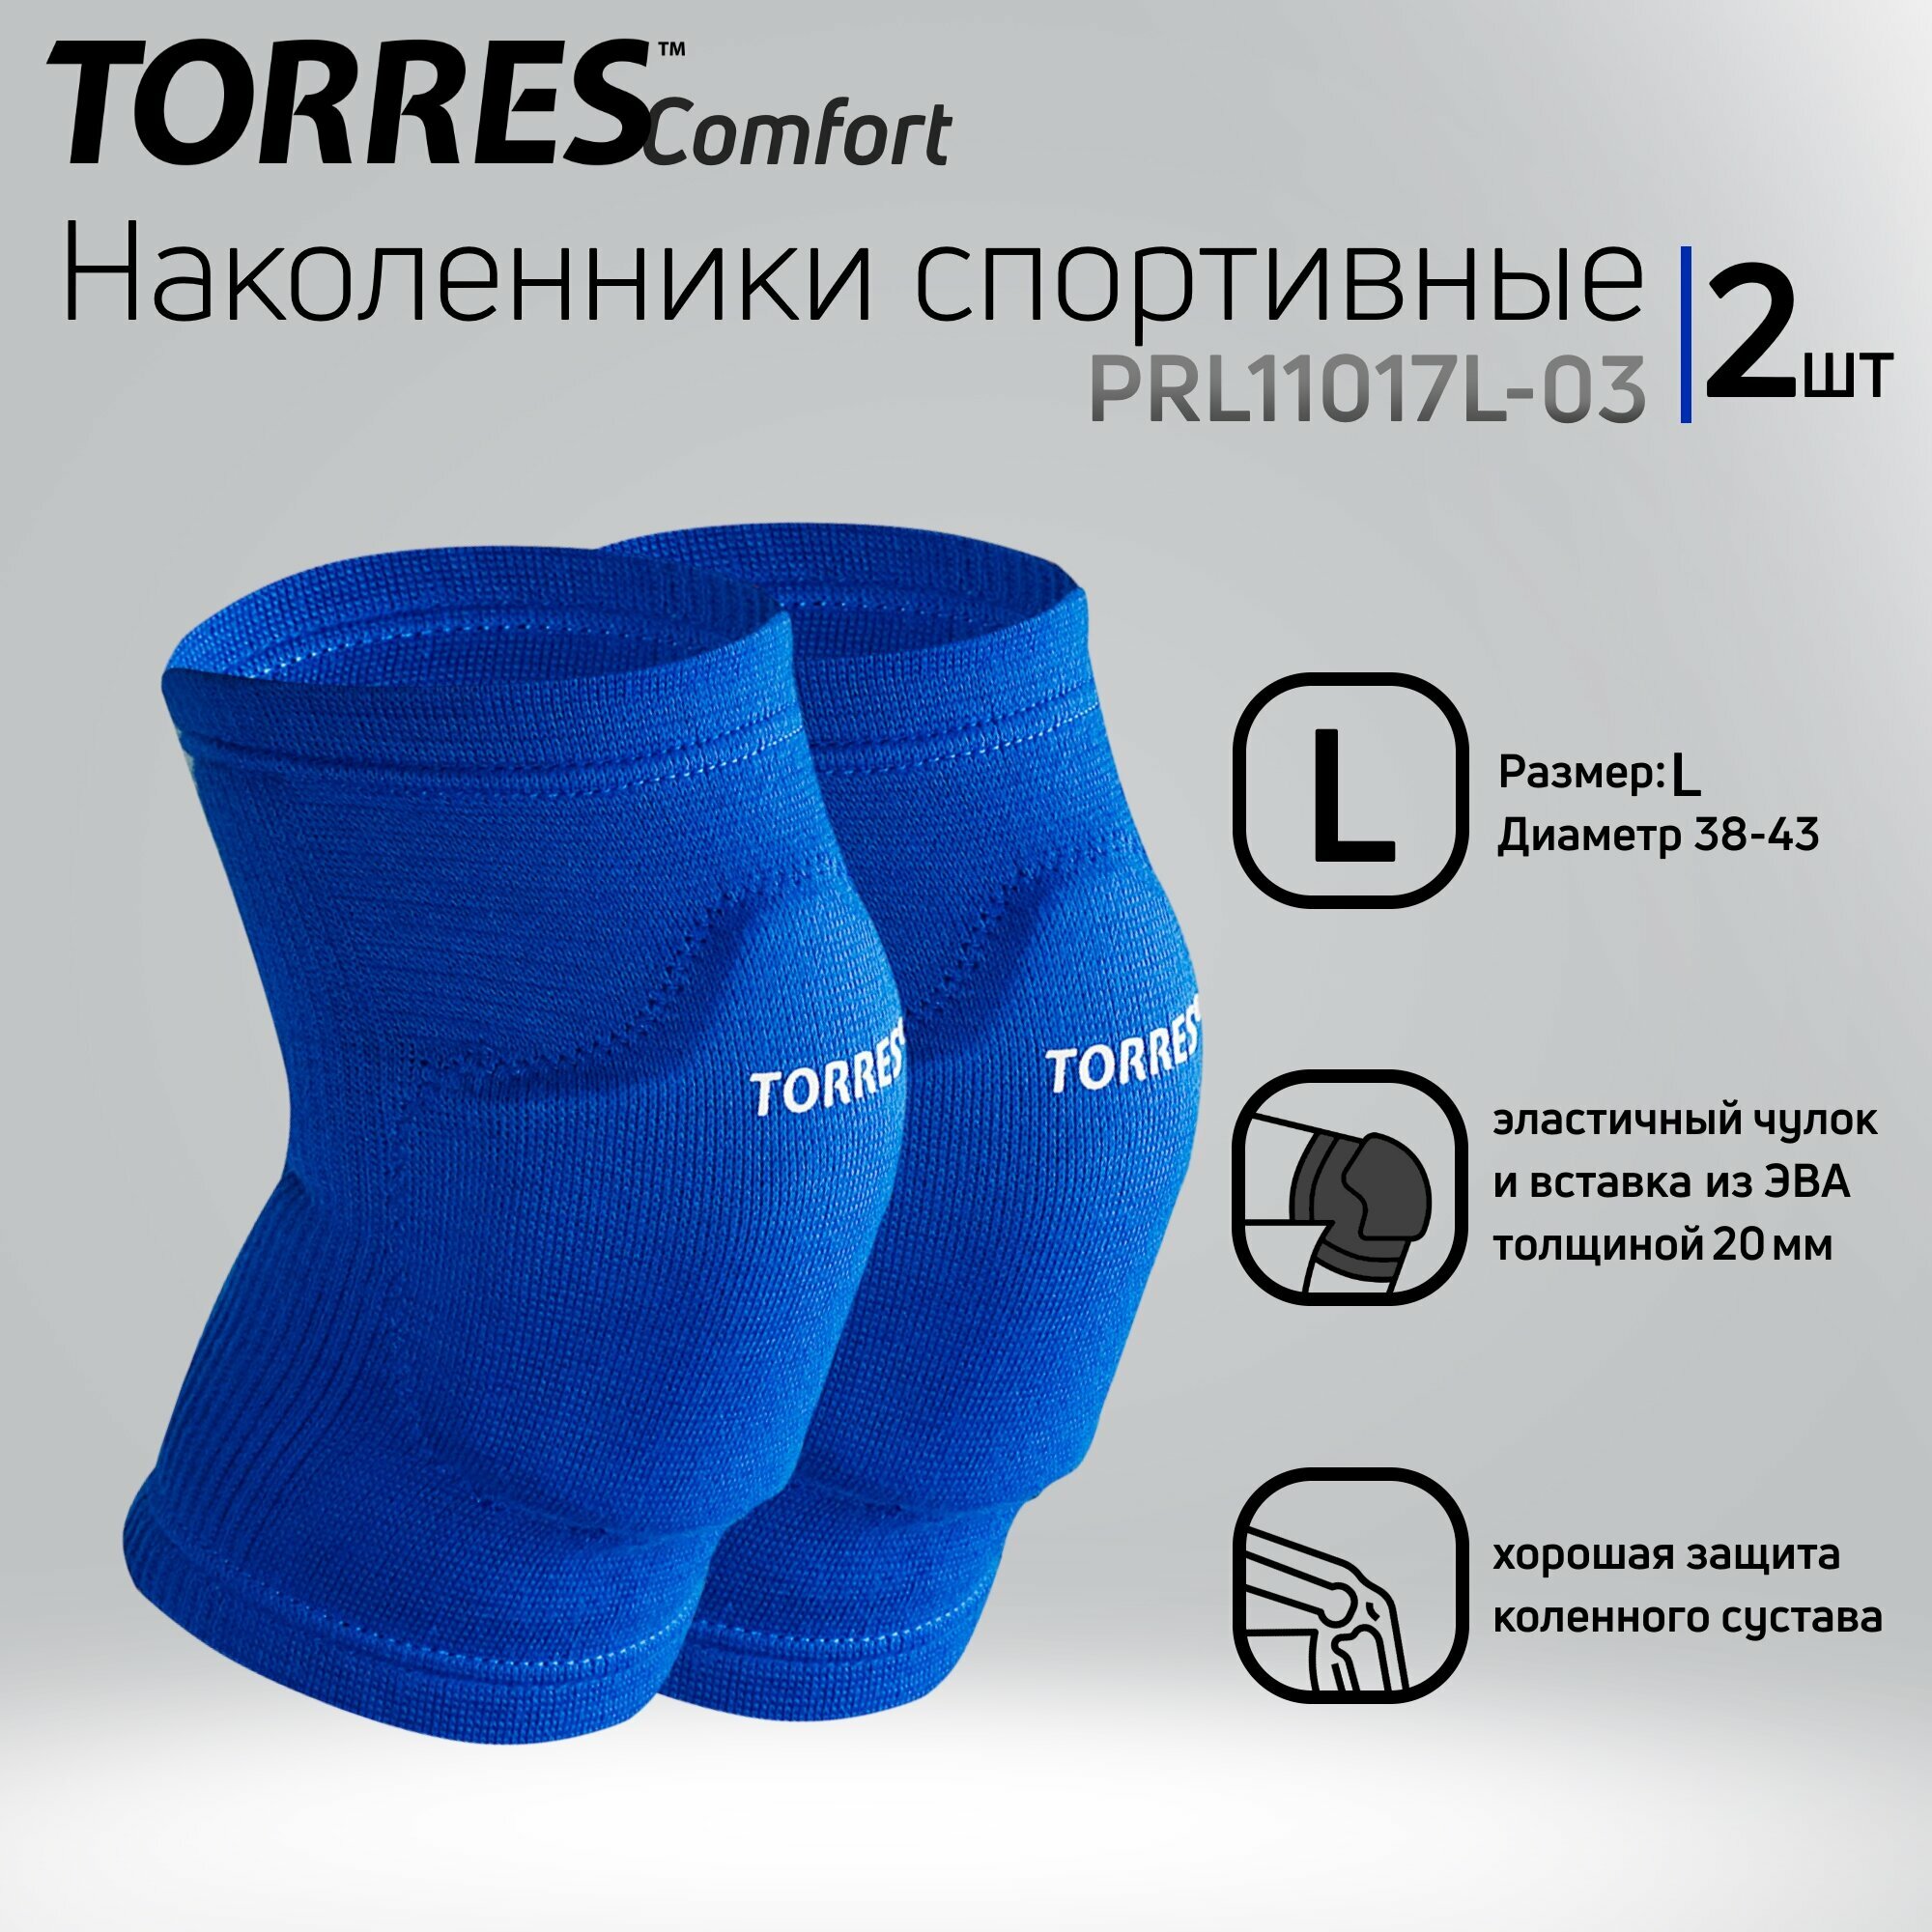   "TORRES Comfort", ,.L, .PRL11017L-03, , 